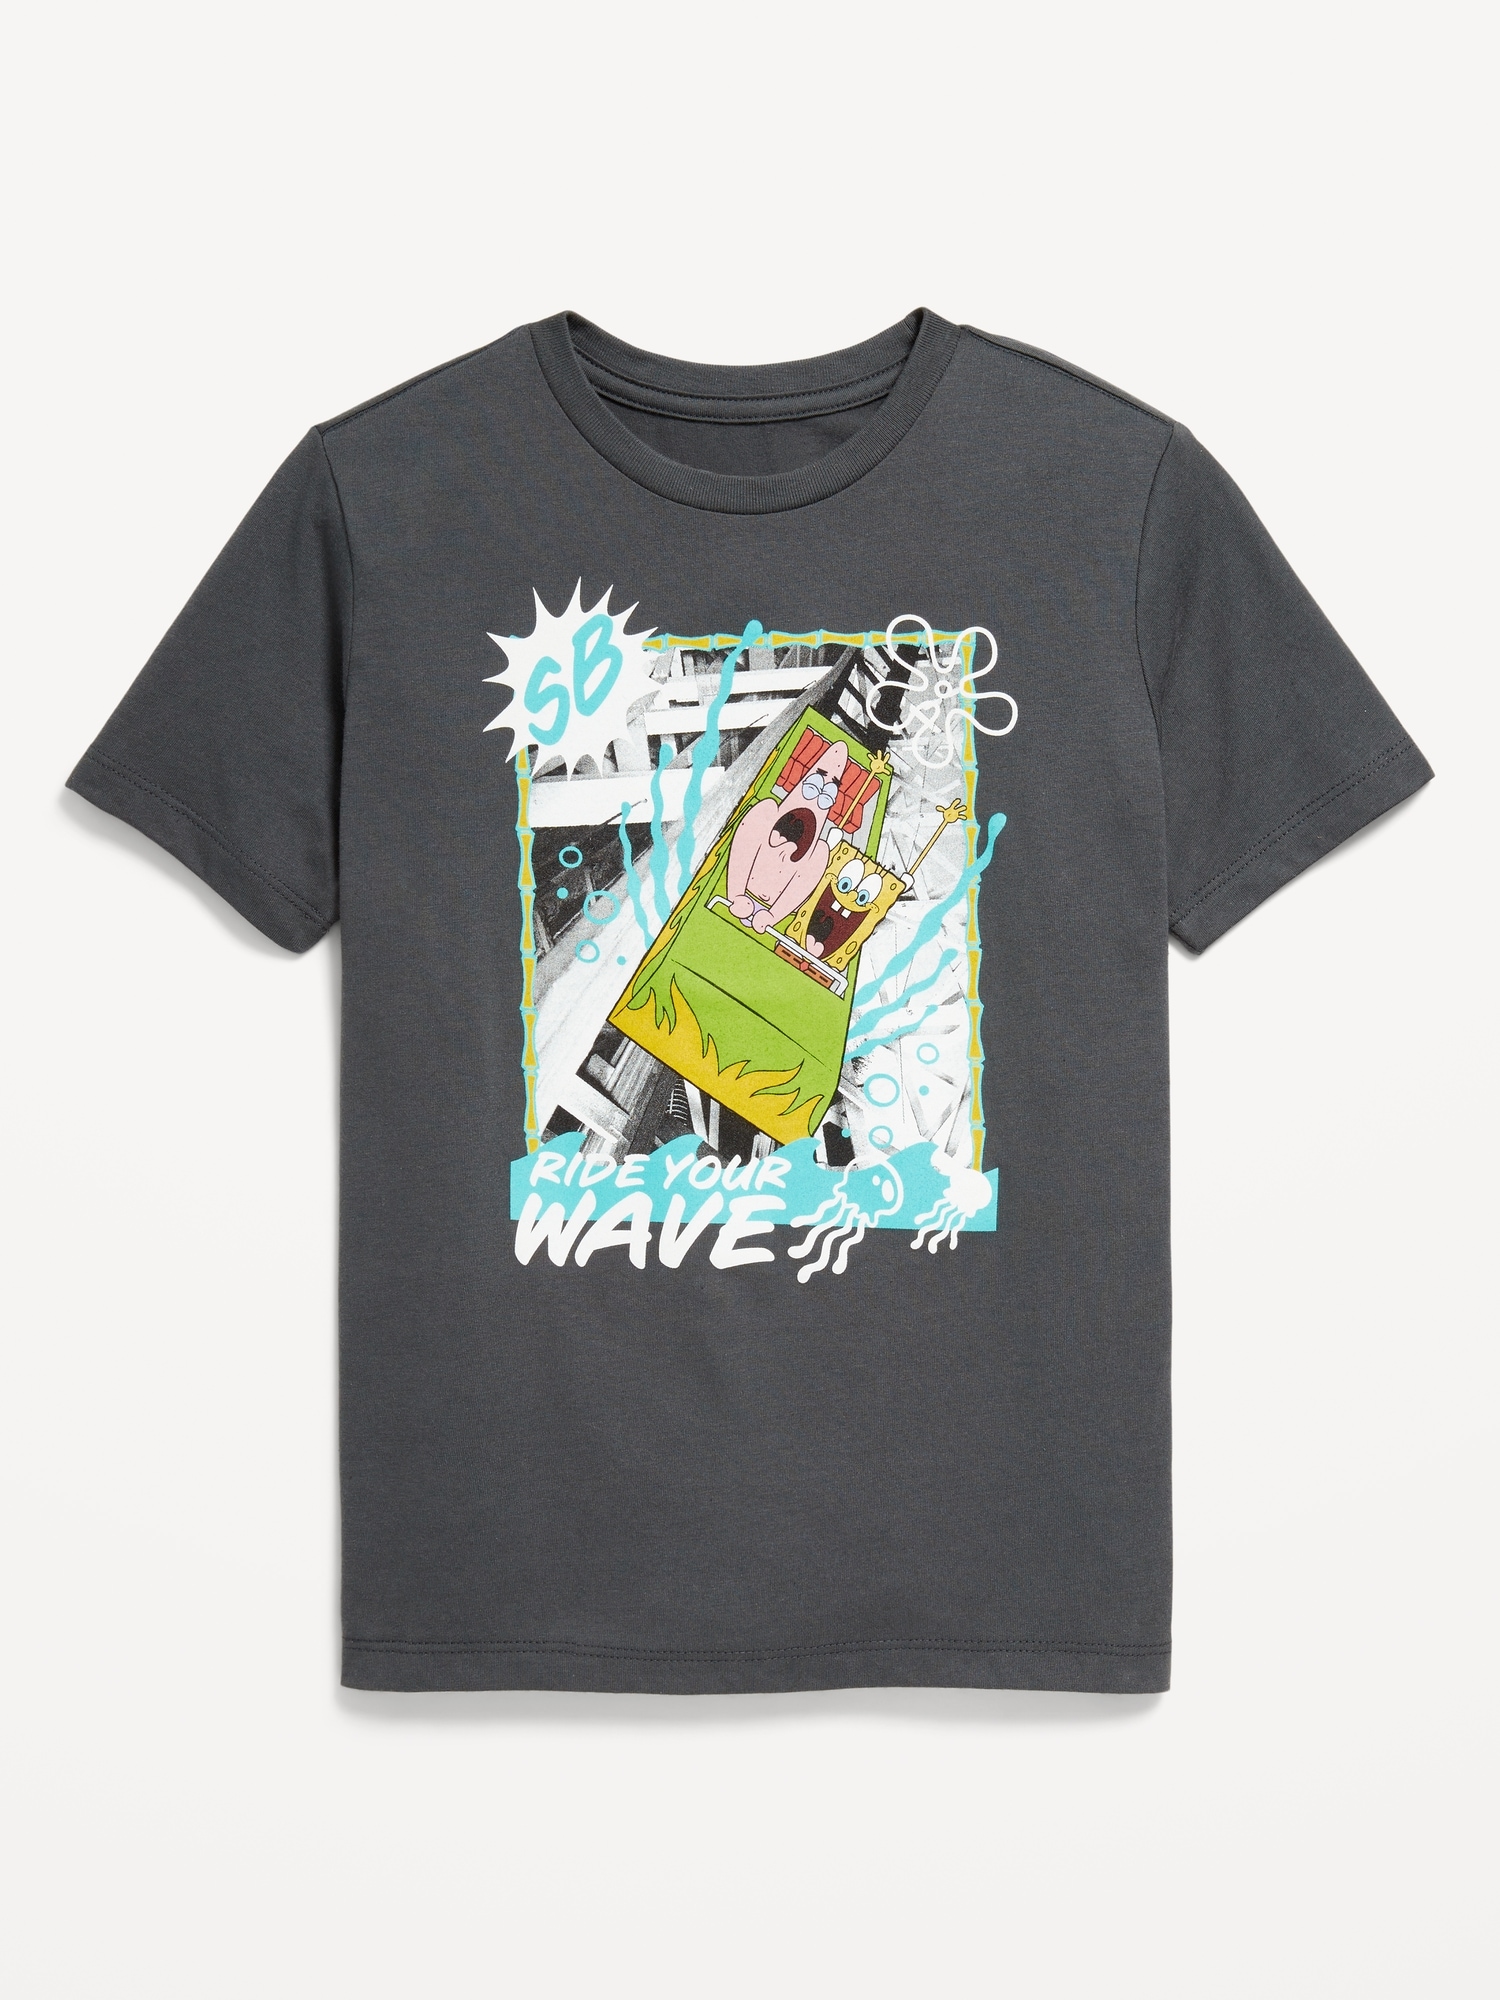 SpongeBob SquarePants™ Gender-Neutral Graphic T-Shirt for Kids